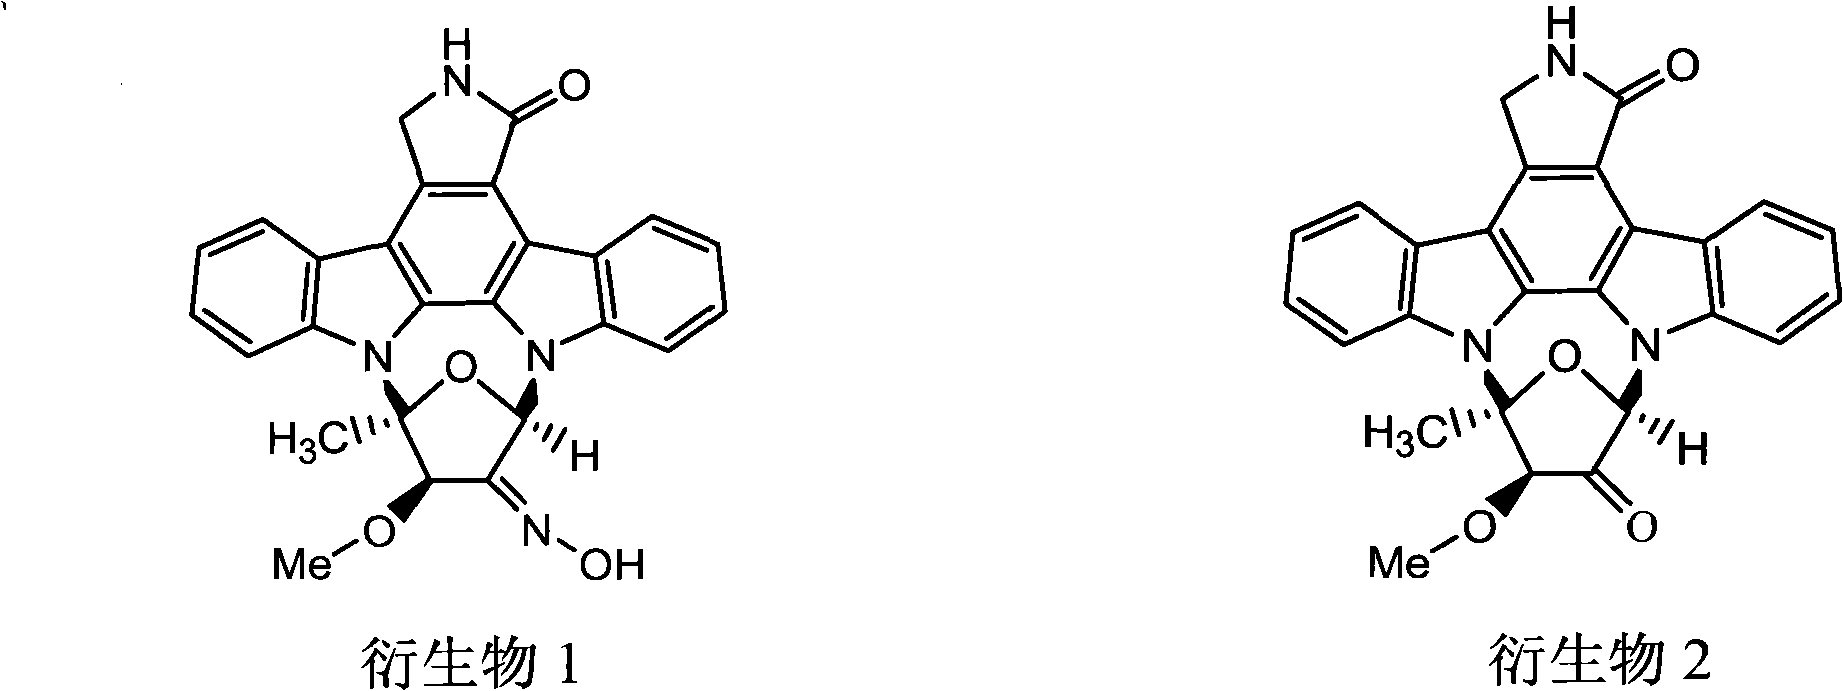 Semisynthetic method of staurosporine derivative